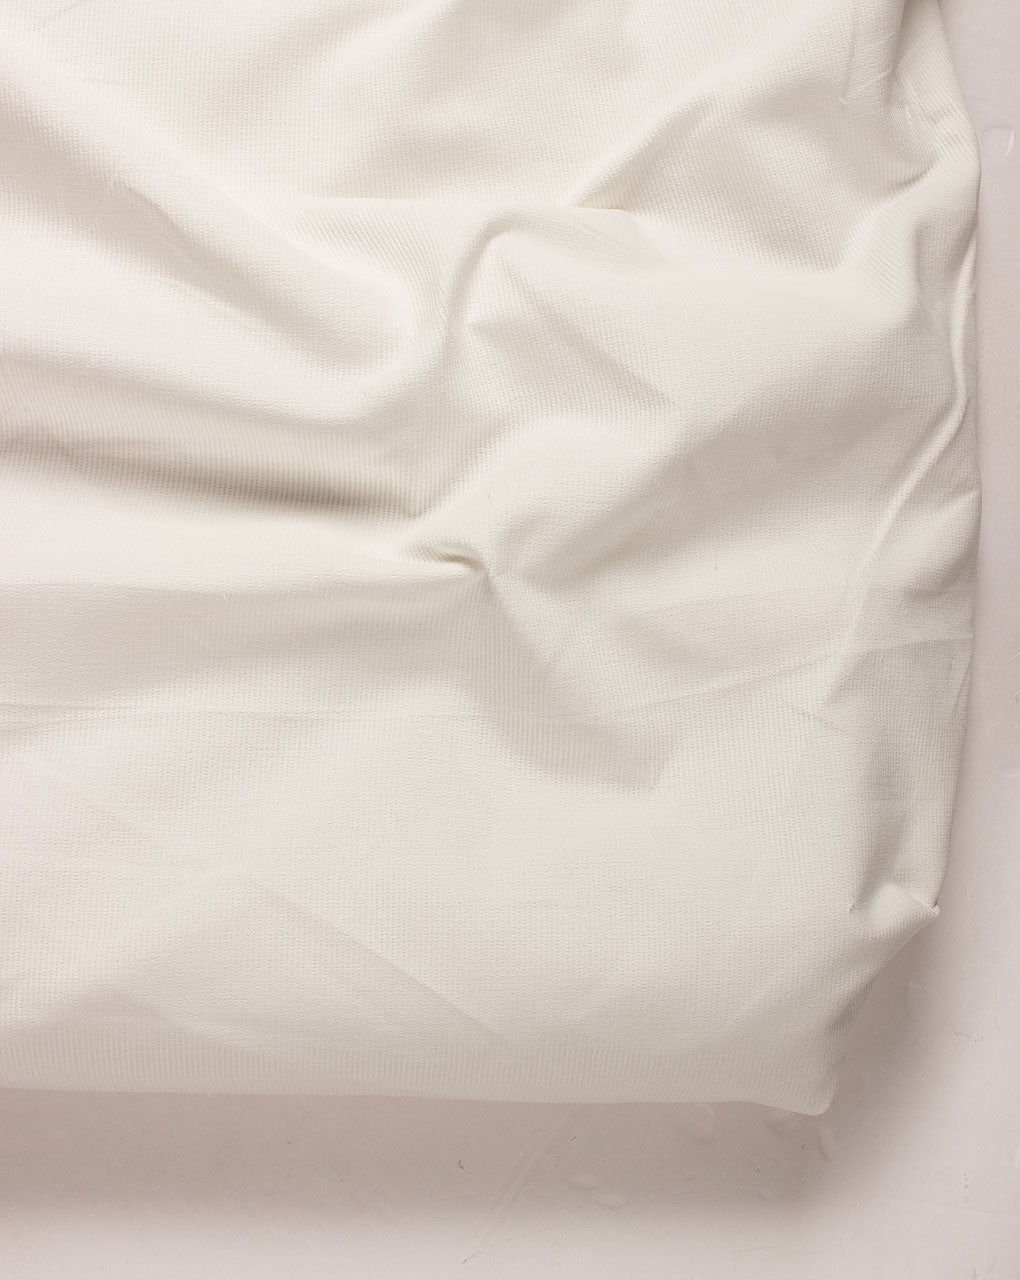 Dyeable Shirting Hemp Corduroy Fabric ( 13 Wales | Width 58 Inch ) - Fabriclore.com